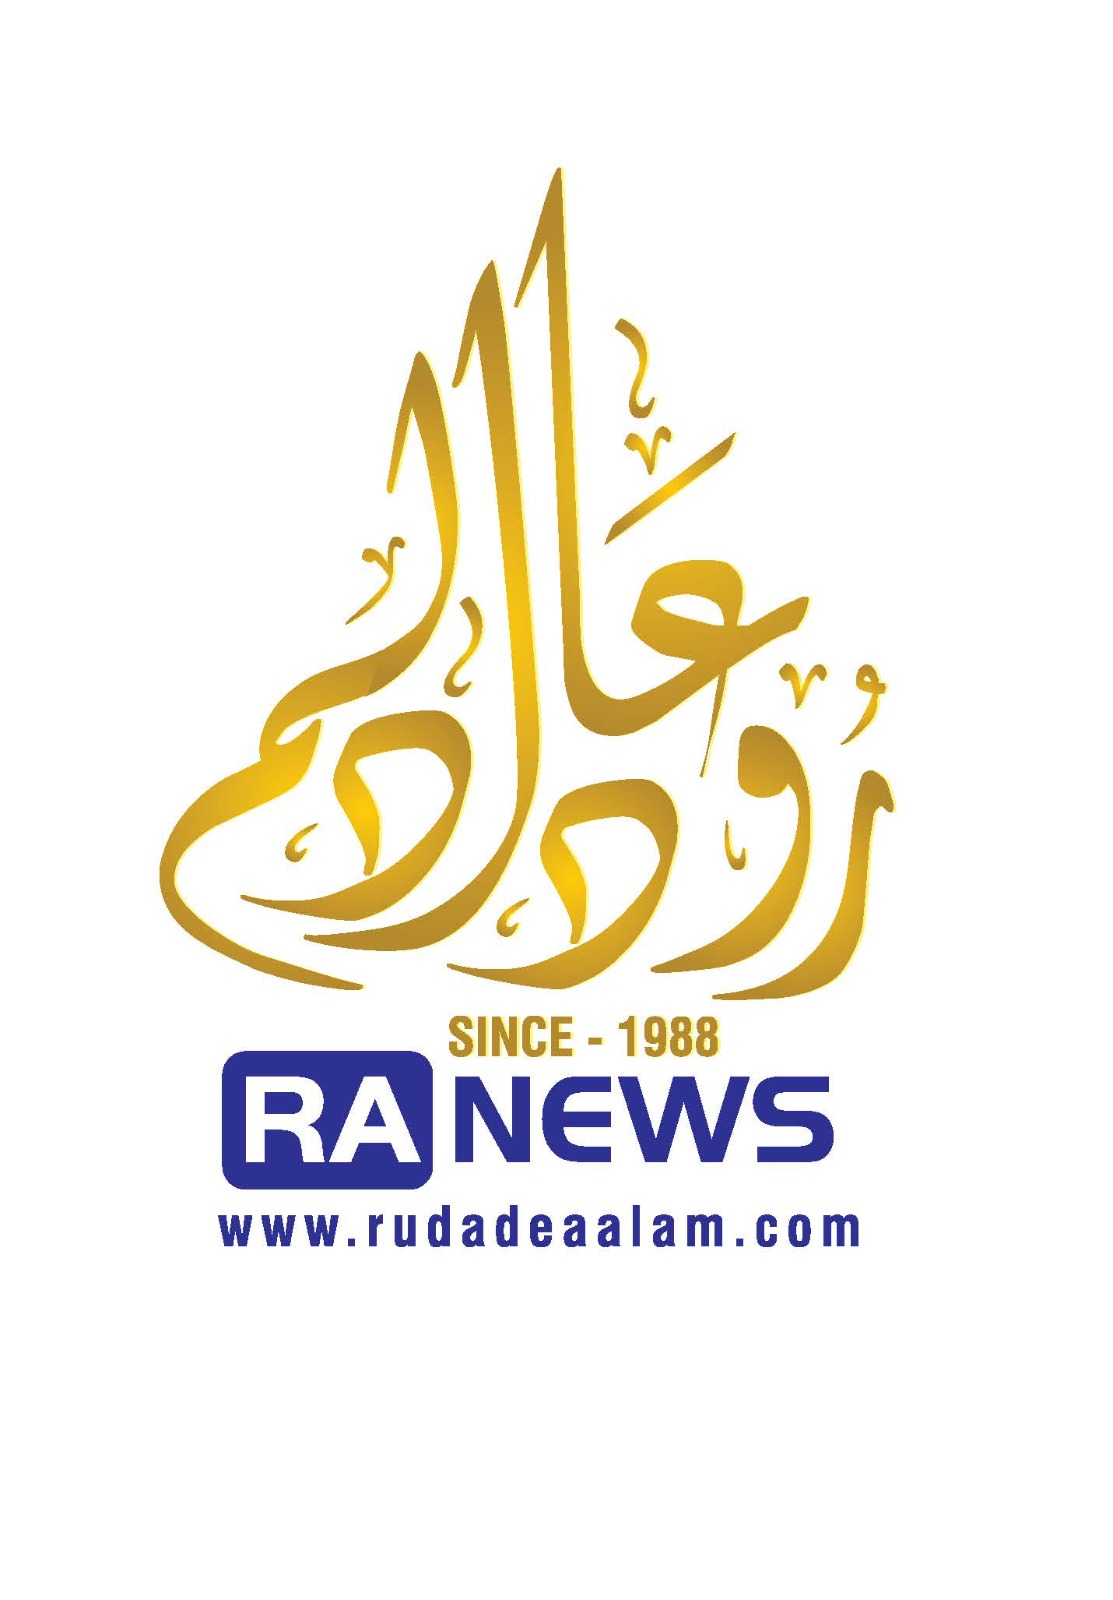 Rudad e Aalam News, India Latest News, World Current Affairs, News Updates, Gulf News, Hyderabad News, India News